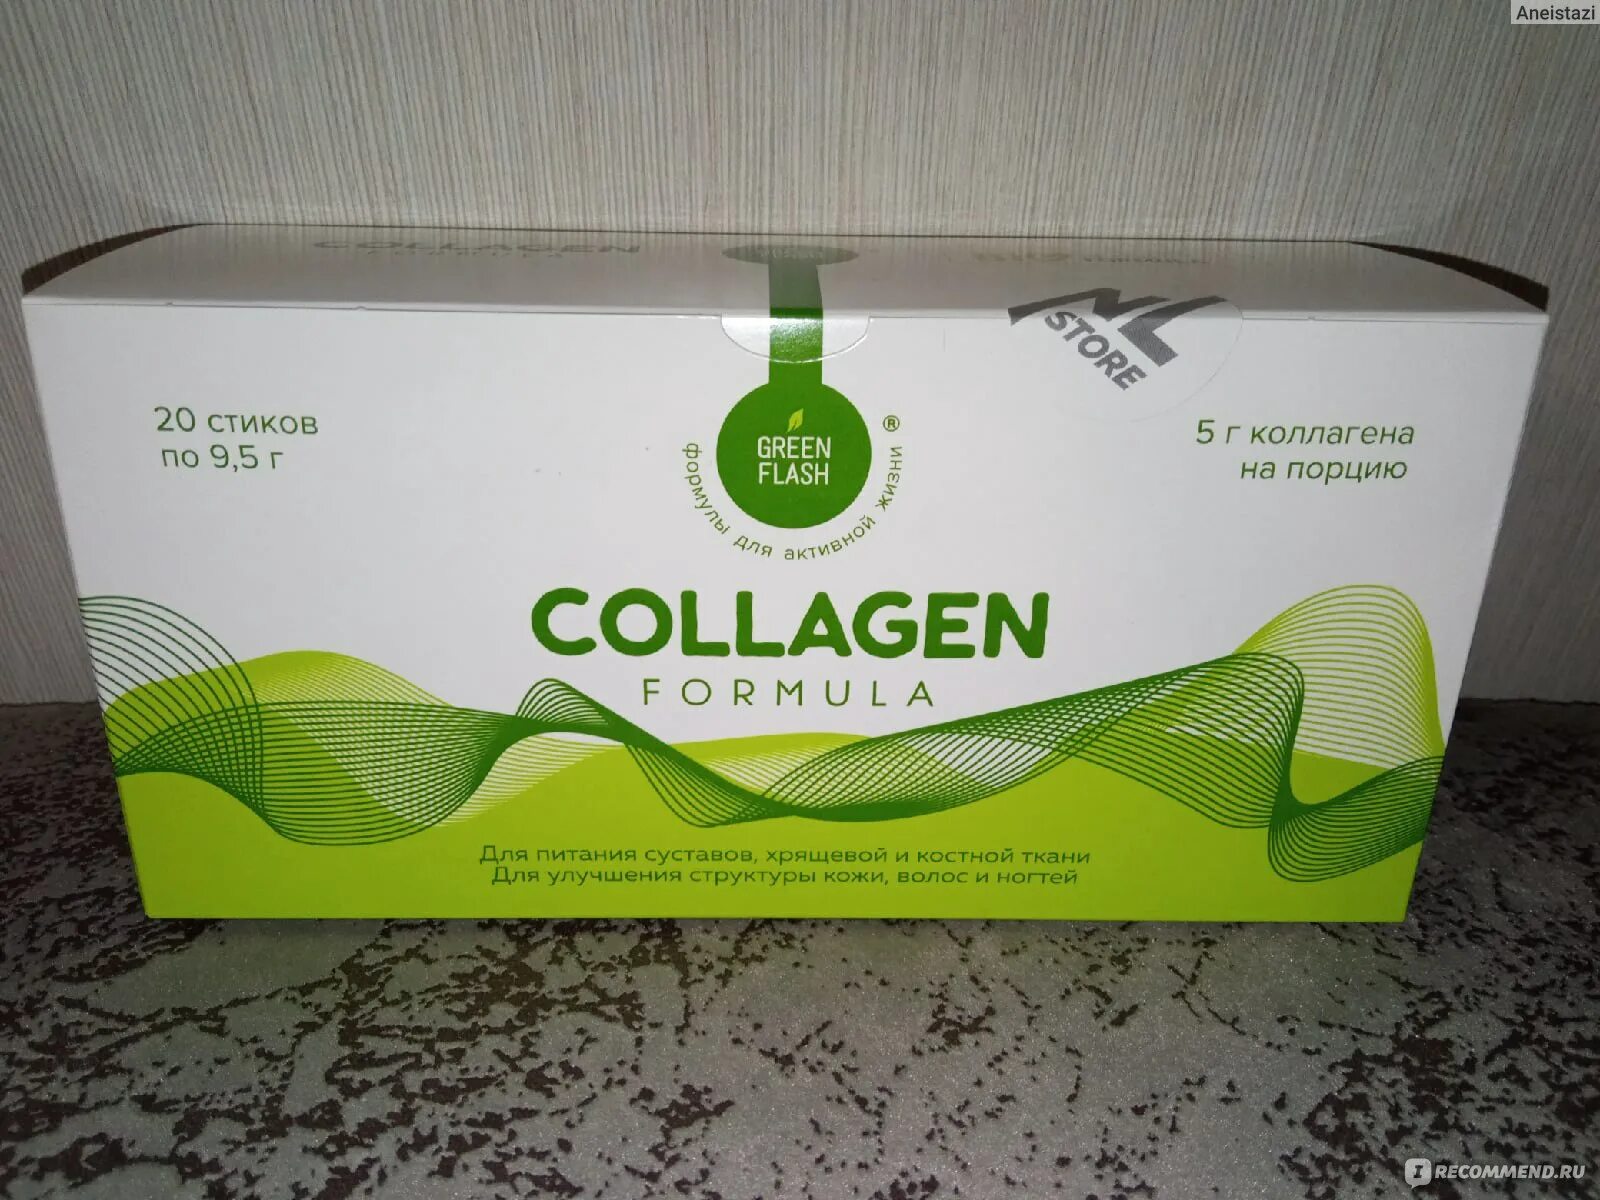 Стики с коллагеном. Стик коллаген НЛ. Collagen Formula nl. Greenflash Collagen Formula стики. Коллаген 20 стиков